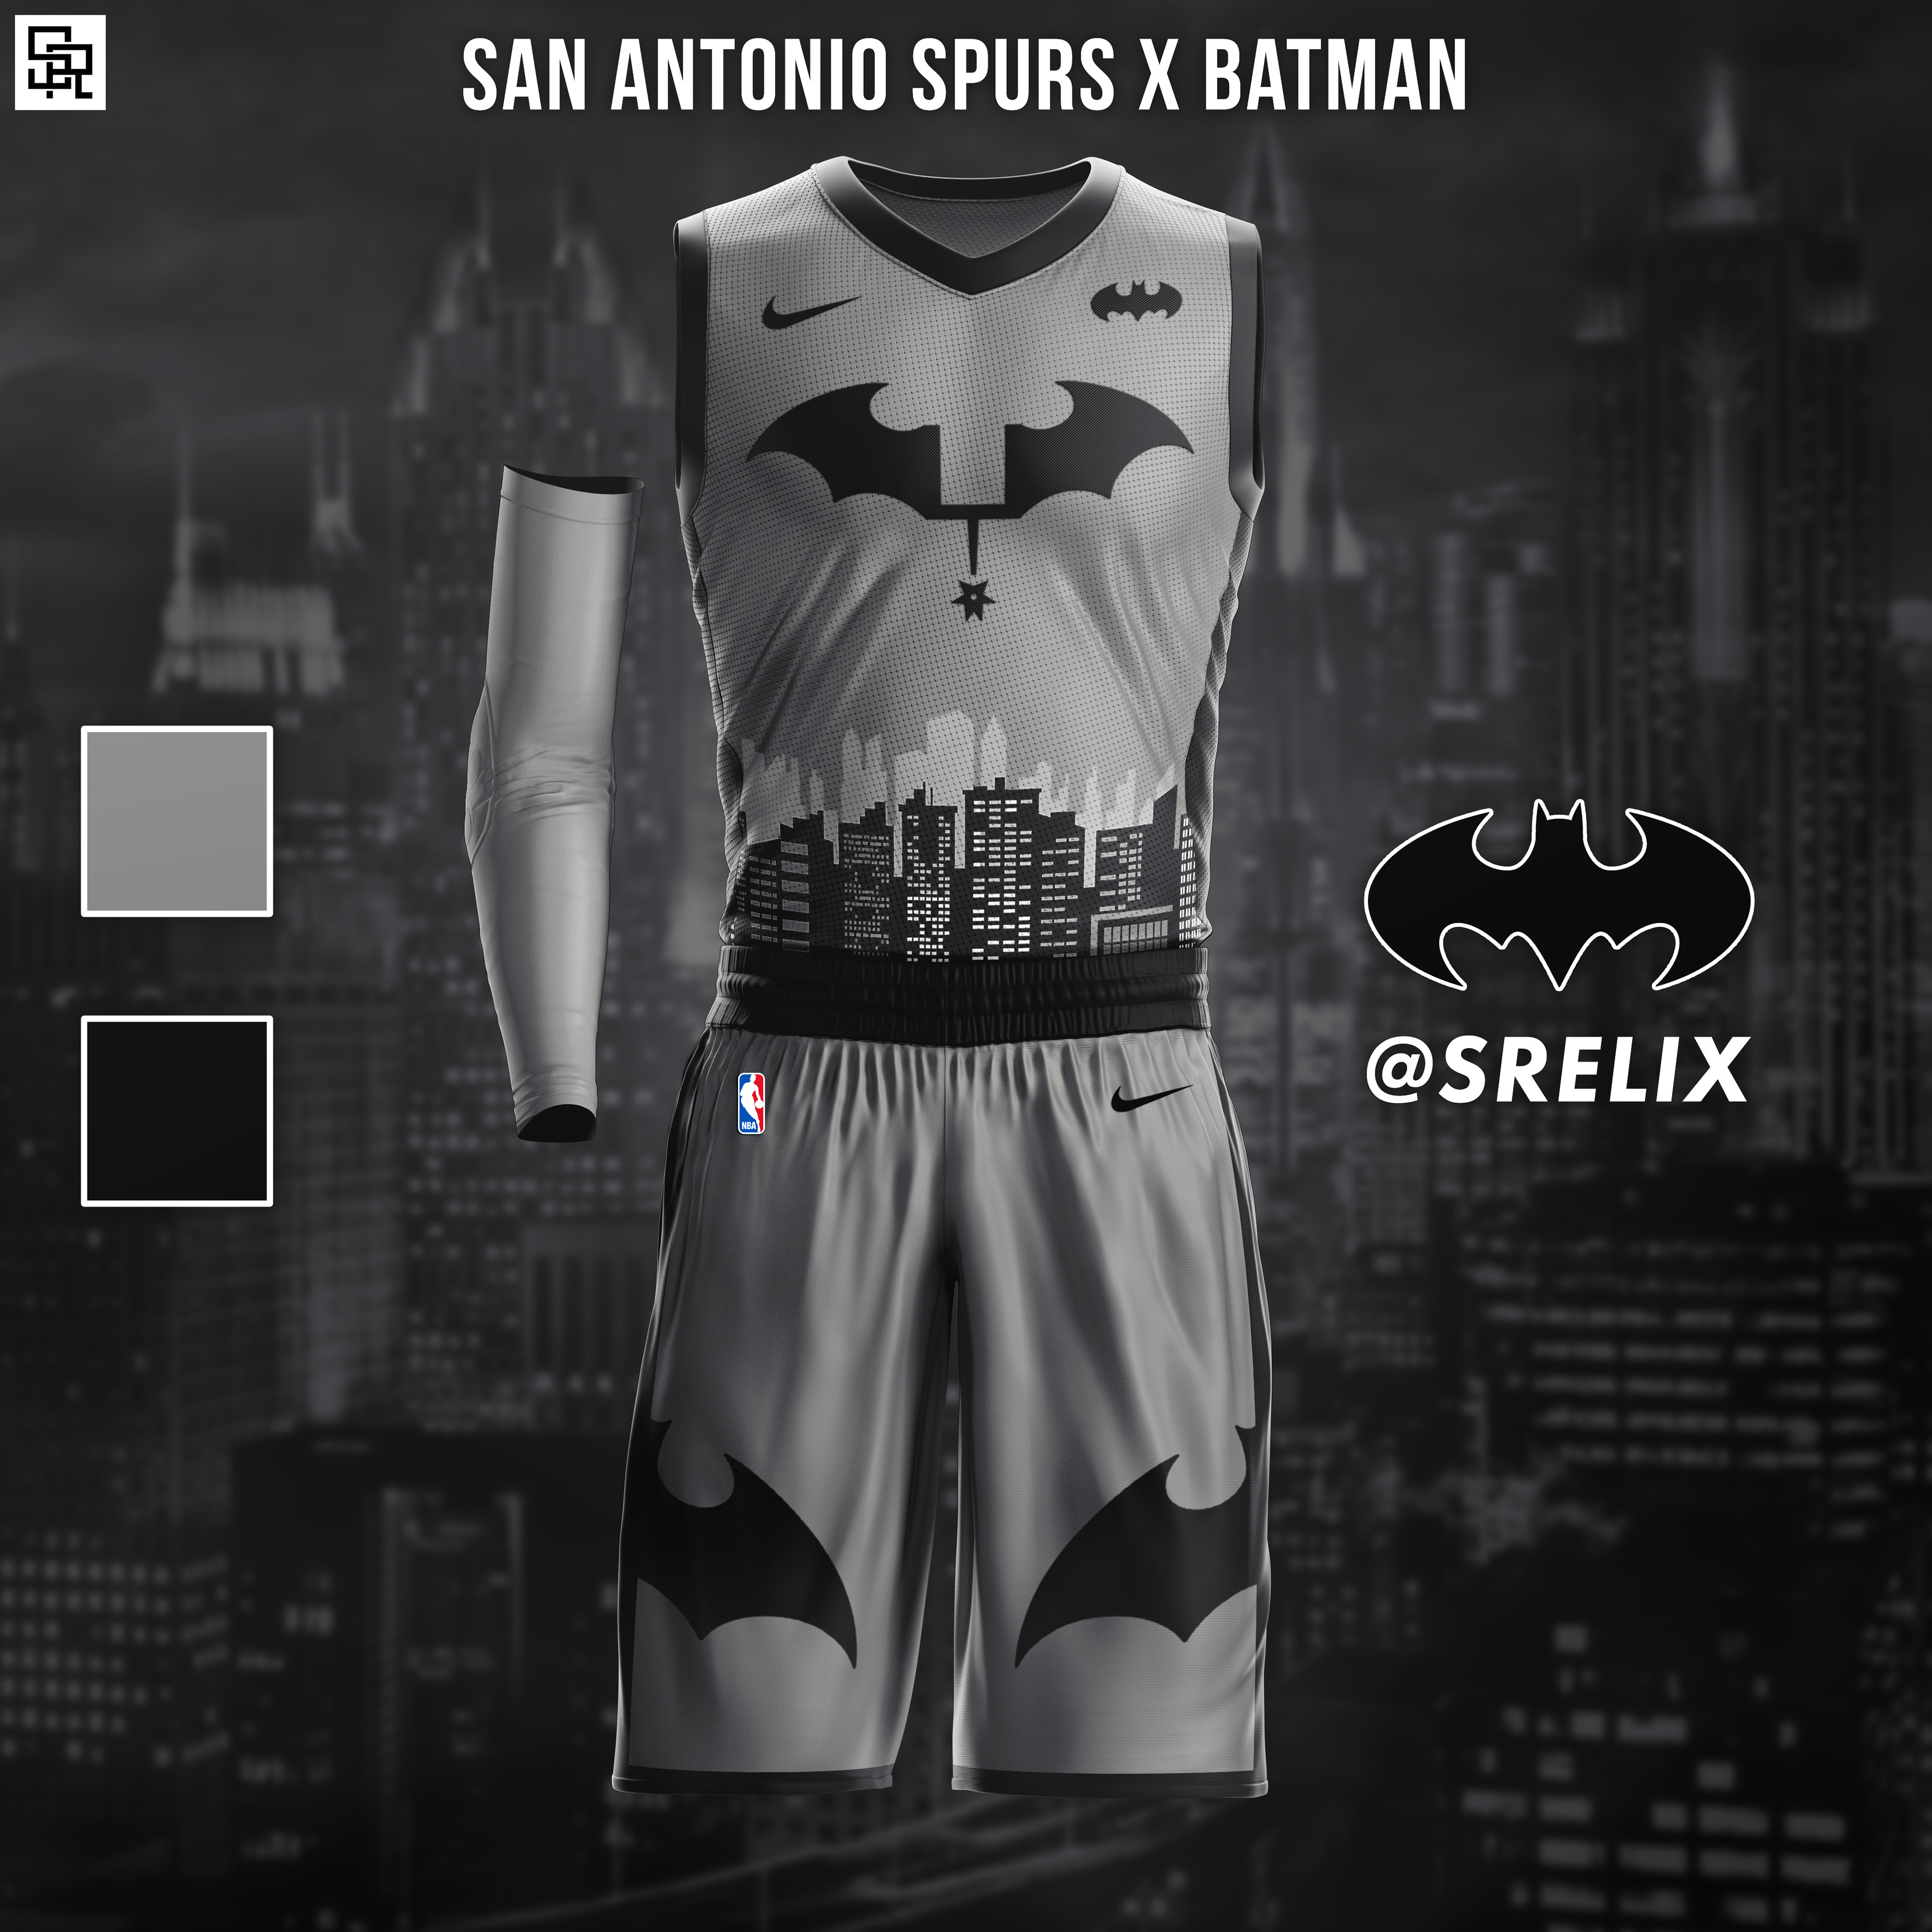 theScore - NBA x superhero jerseys. Who's got the best